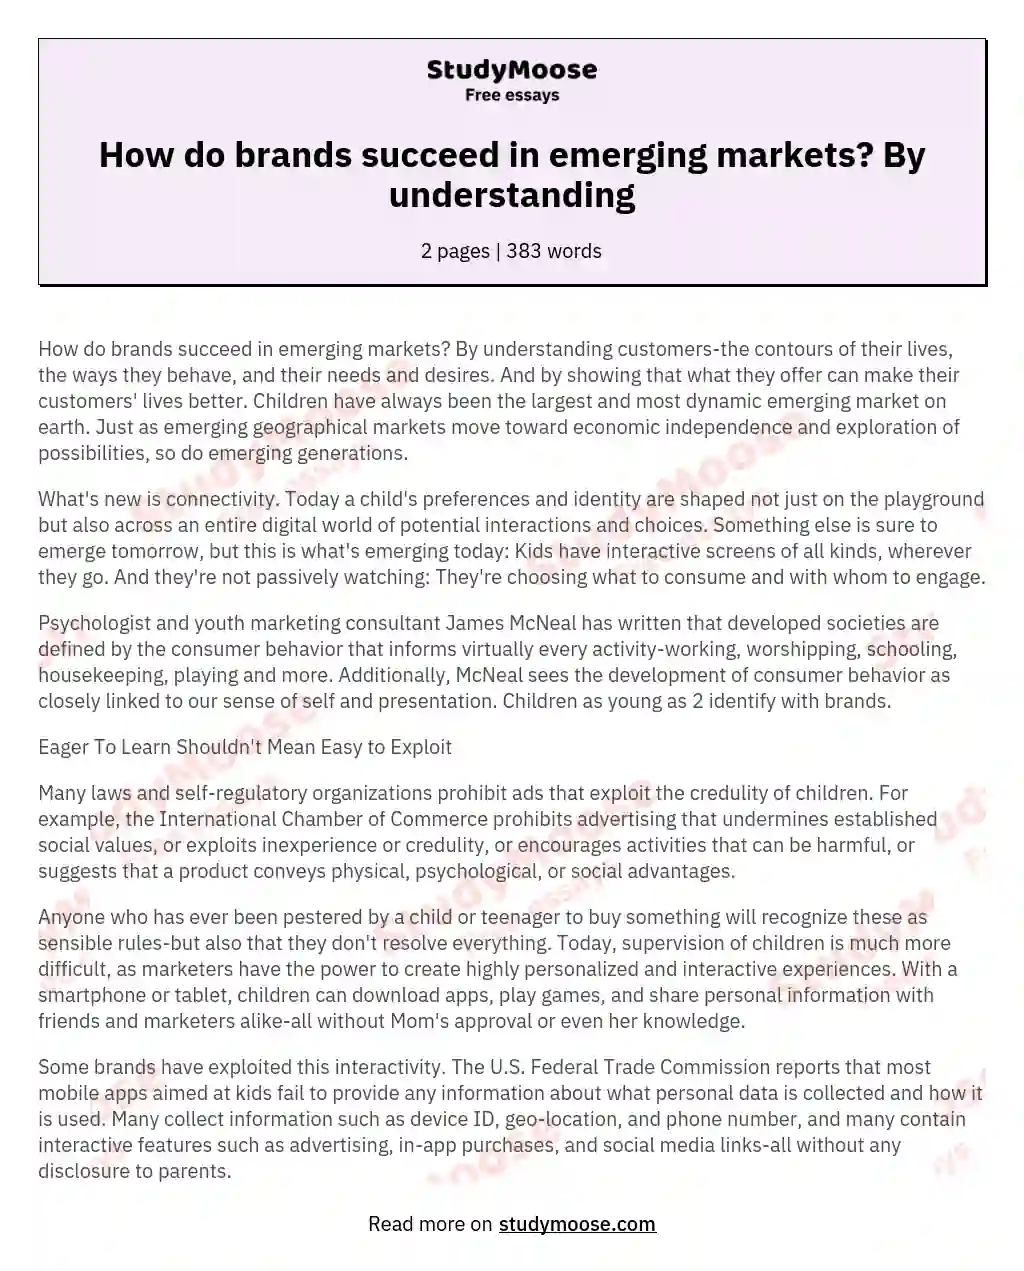 How do brands succeed in emerging markets? By understanding essay